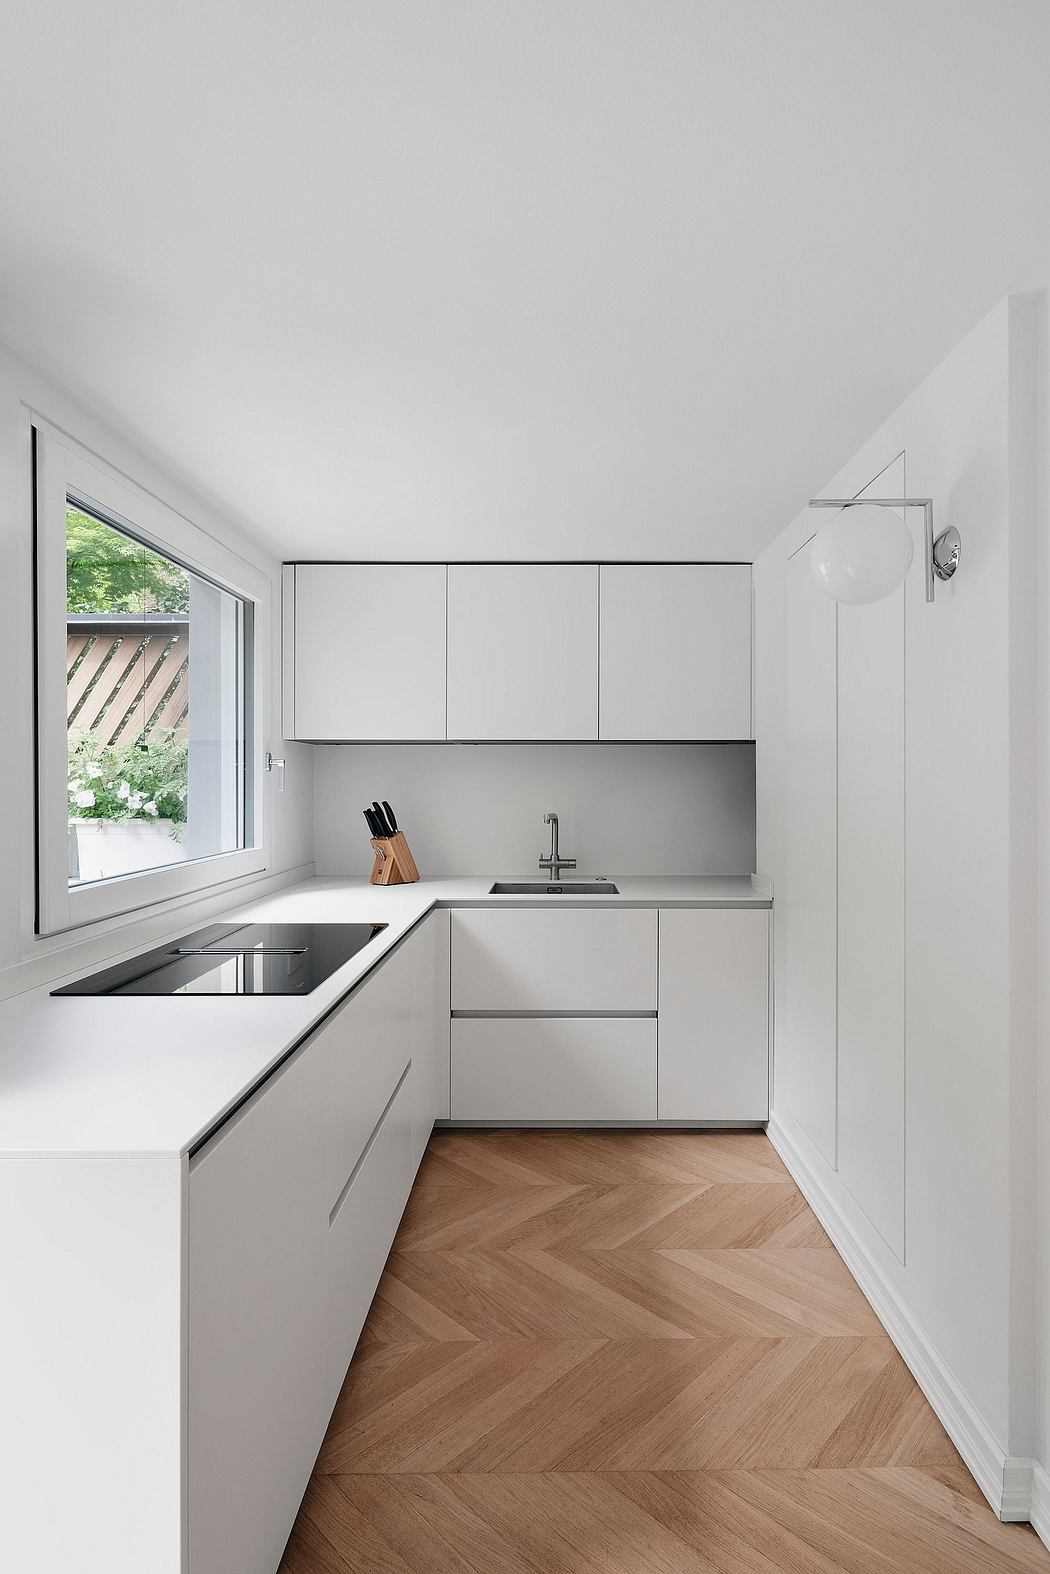 Modern, minimalist white kitchen with herringbone wood flooring.